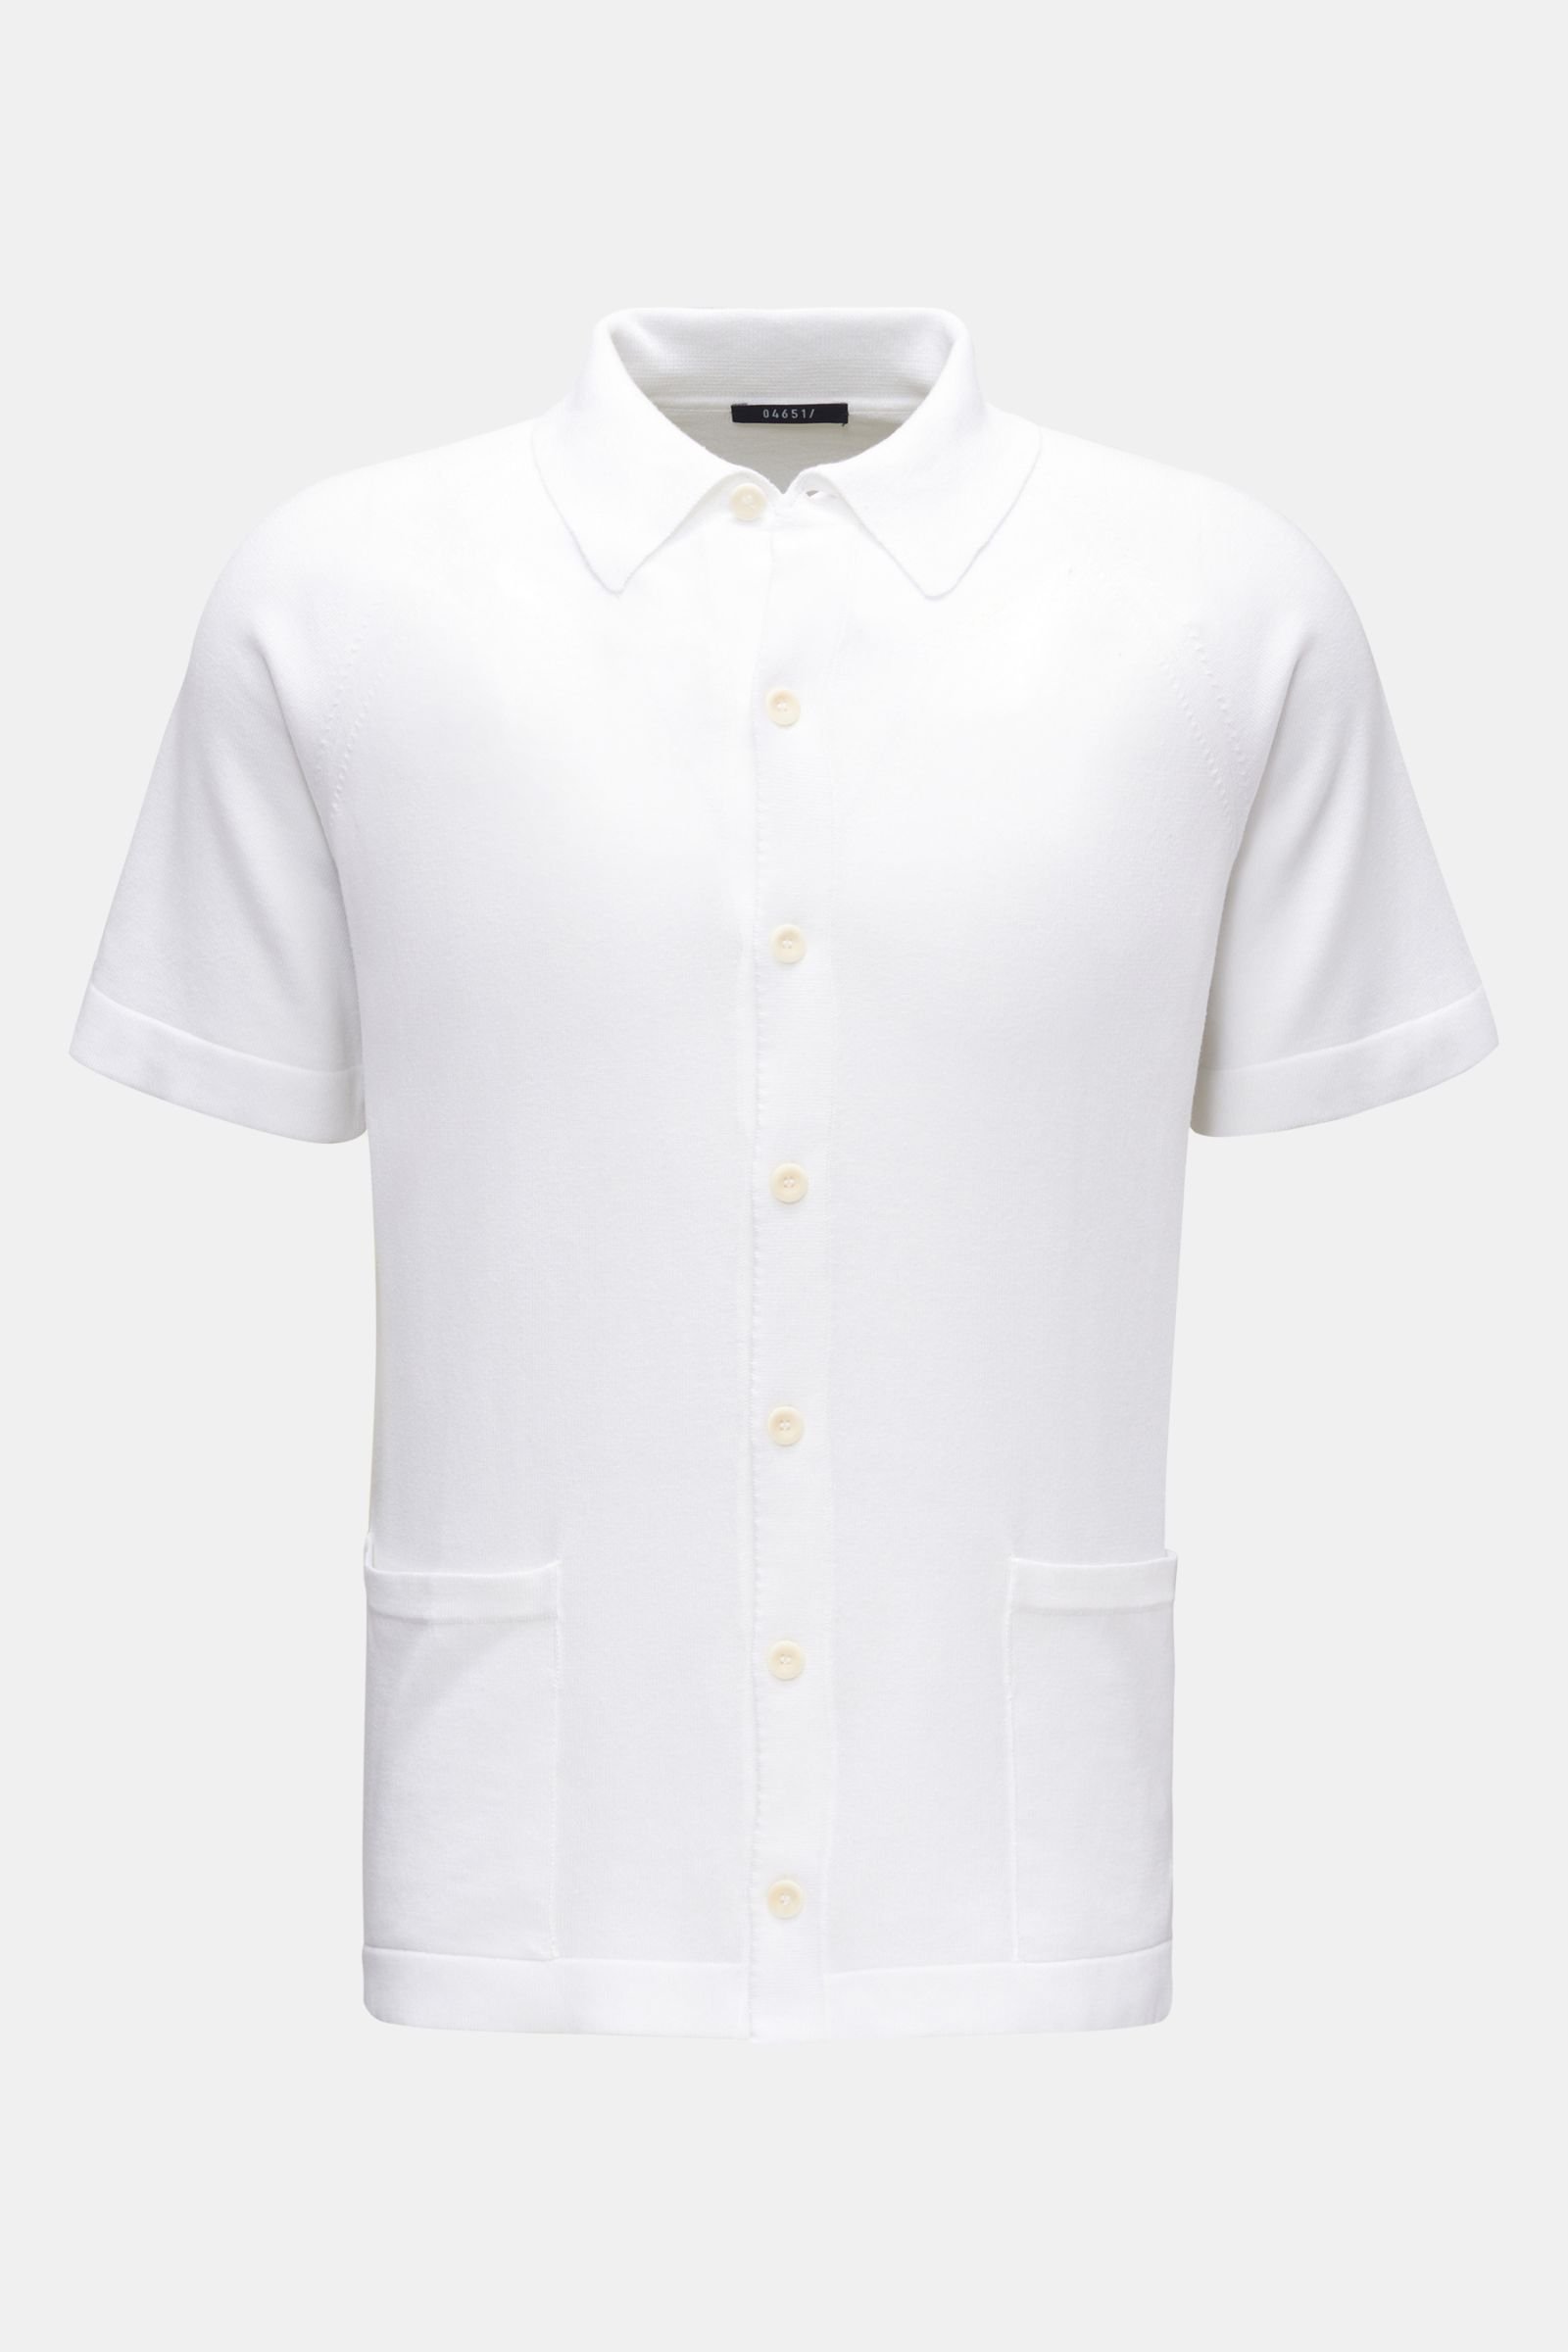 Short sleeve knit shirt 'Foggy Shirt' narrow collar white